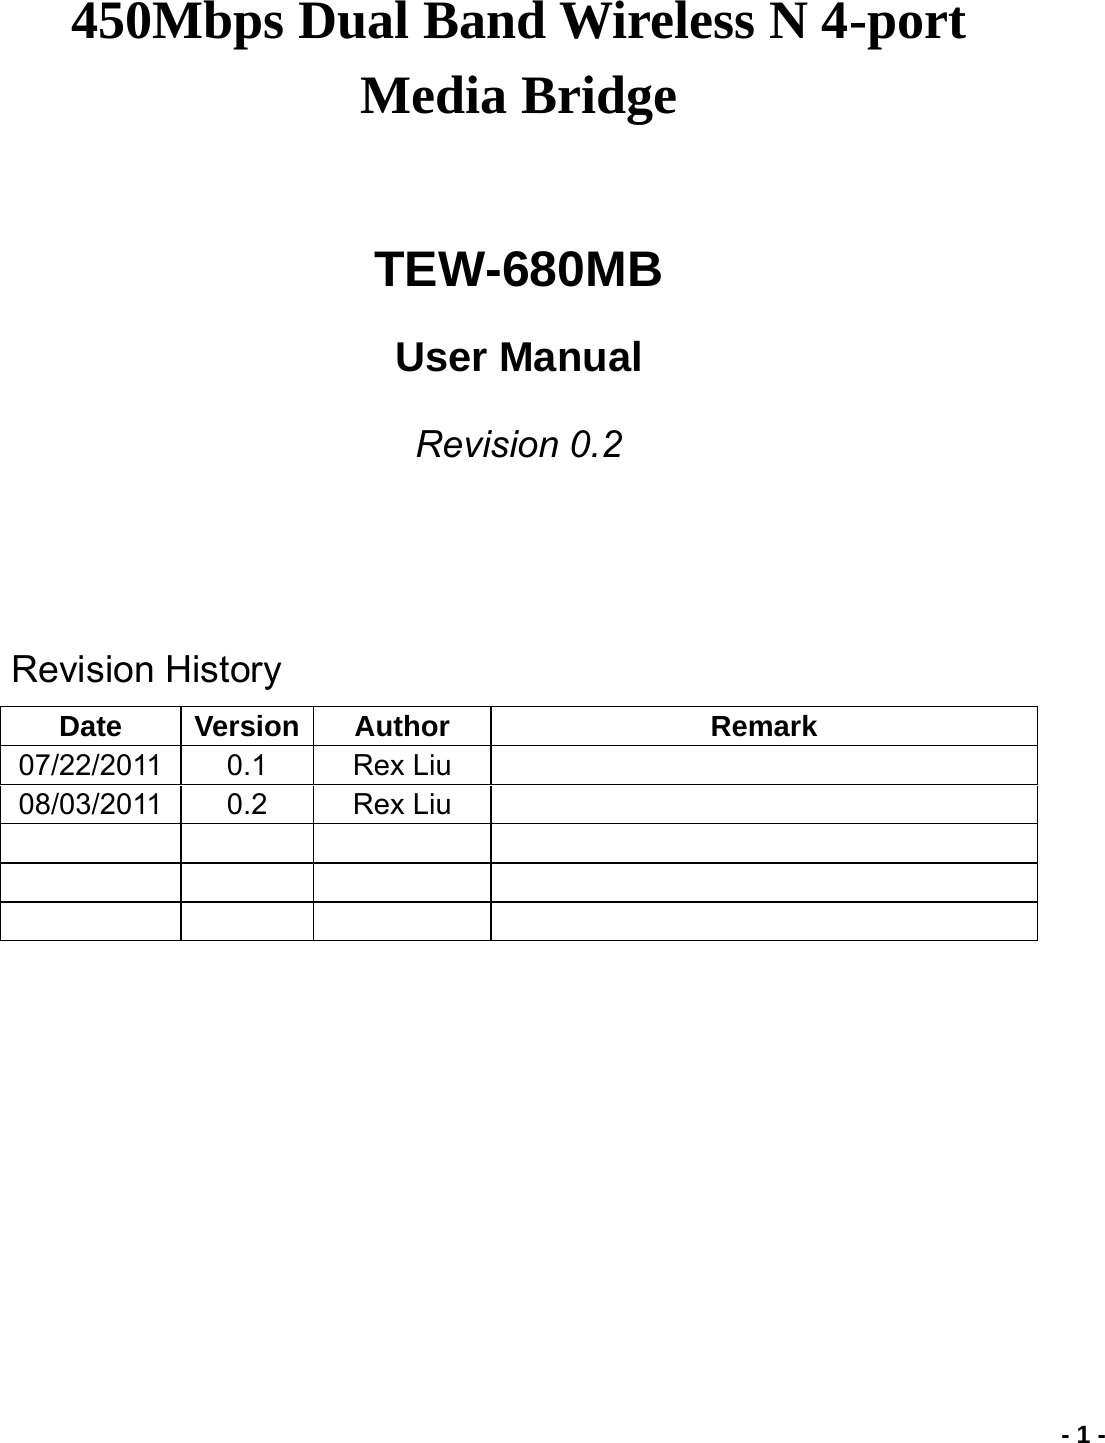                             - 1 -450Mbps Dual Band Wireless N 4-port Media Bridge  TEW-680MB  User Manual Revision 0.2     Revision History Date Version Author  Remark 07/22/2011 0.1  Rex Liu  08/03/2011 0.2  Rex Liu              